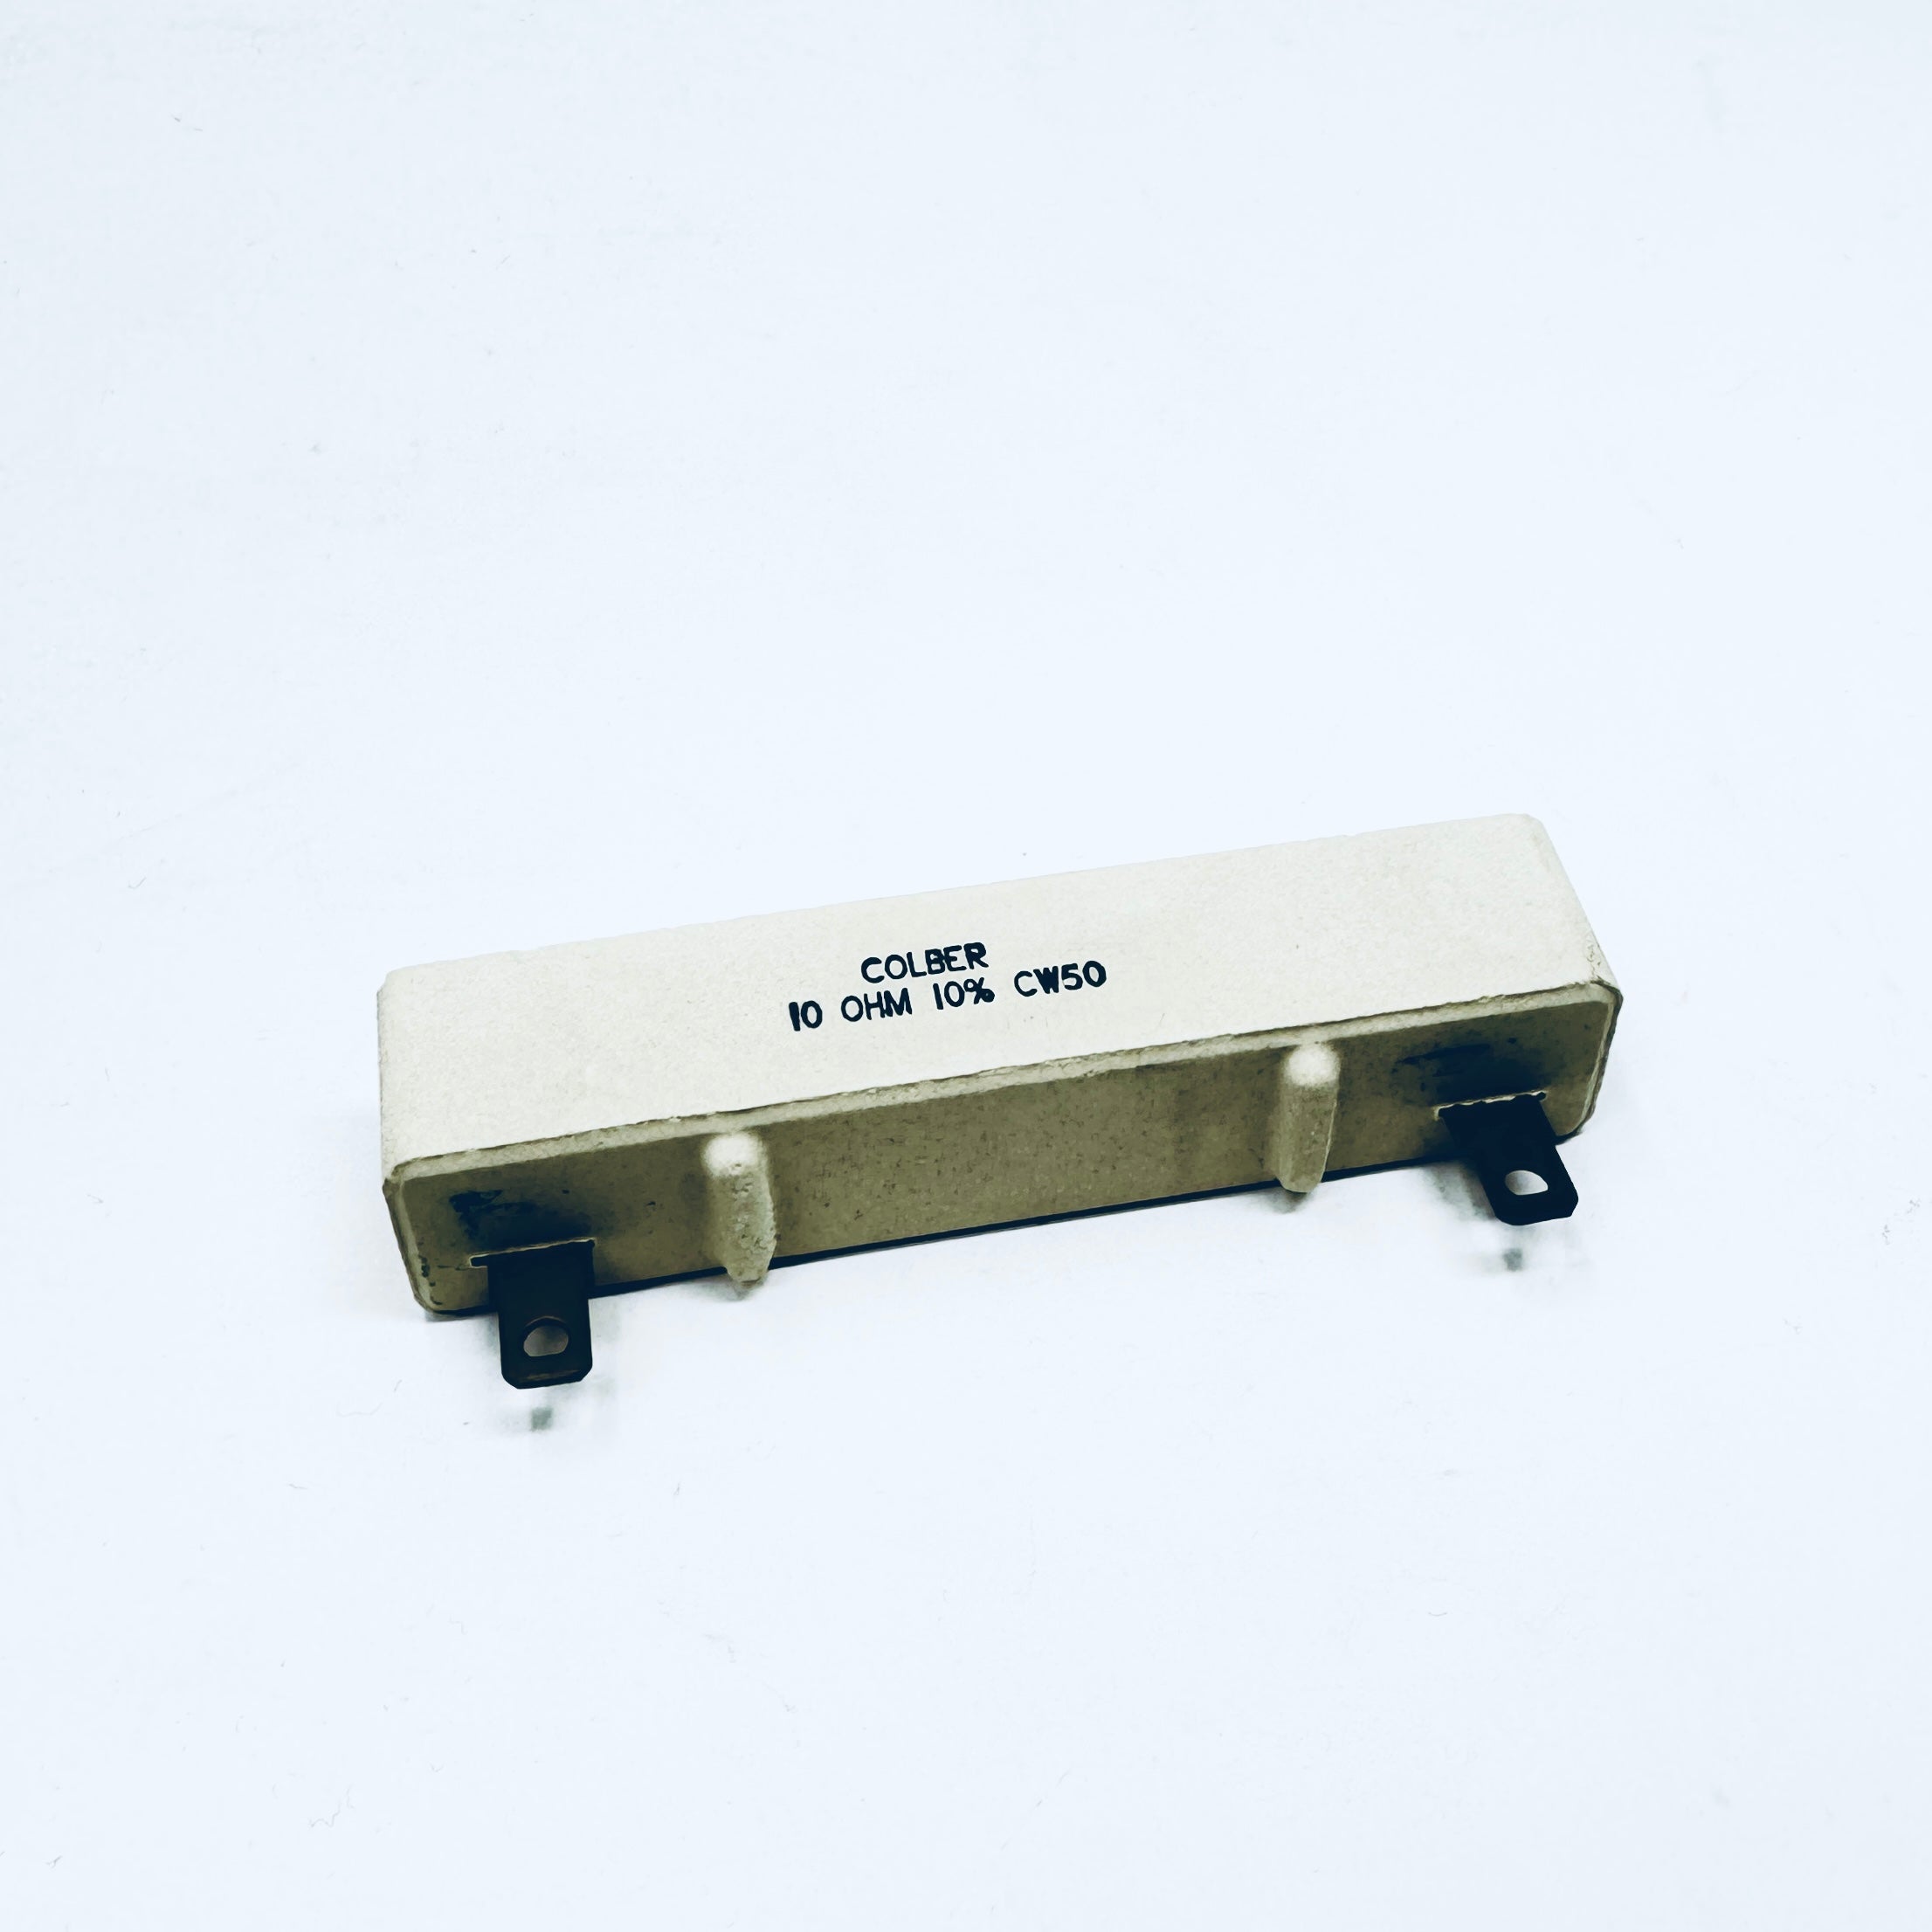 Peavey 30250027 10 Ohm 10% 50 Watt Ceramic Resistor